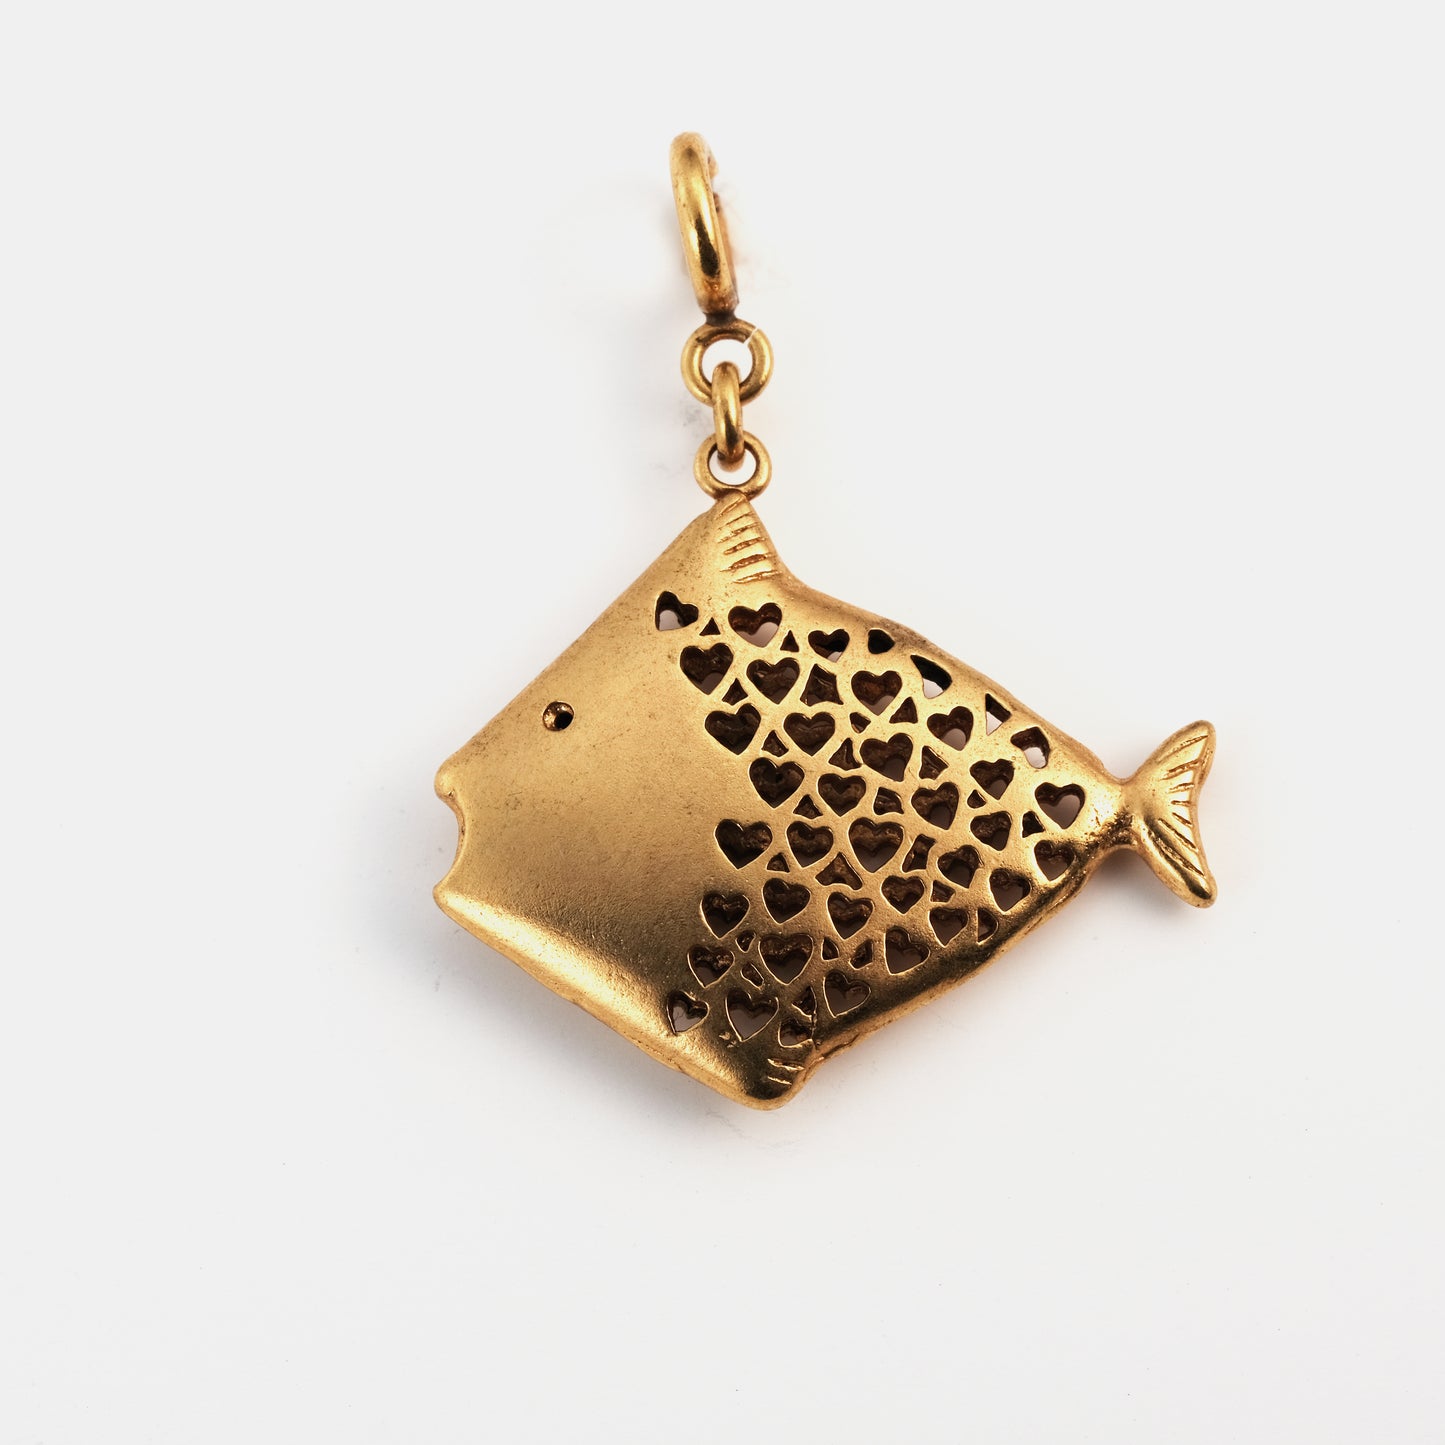 Fish pendants